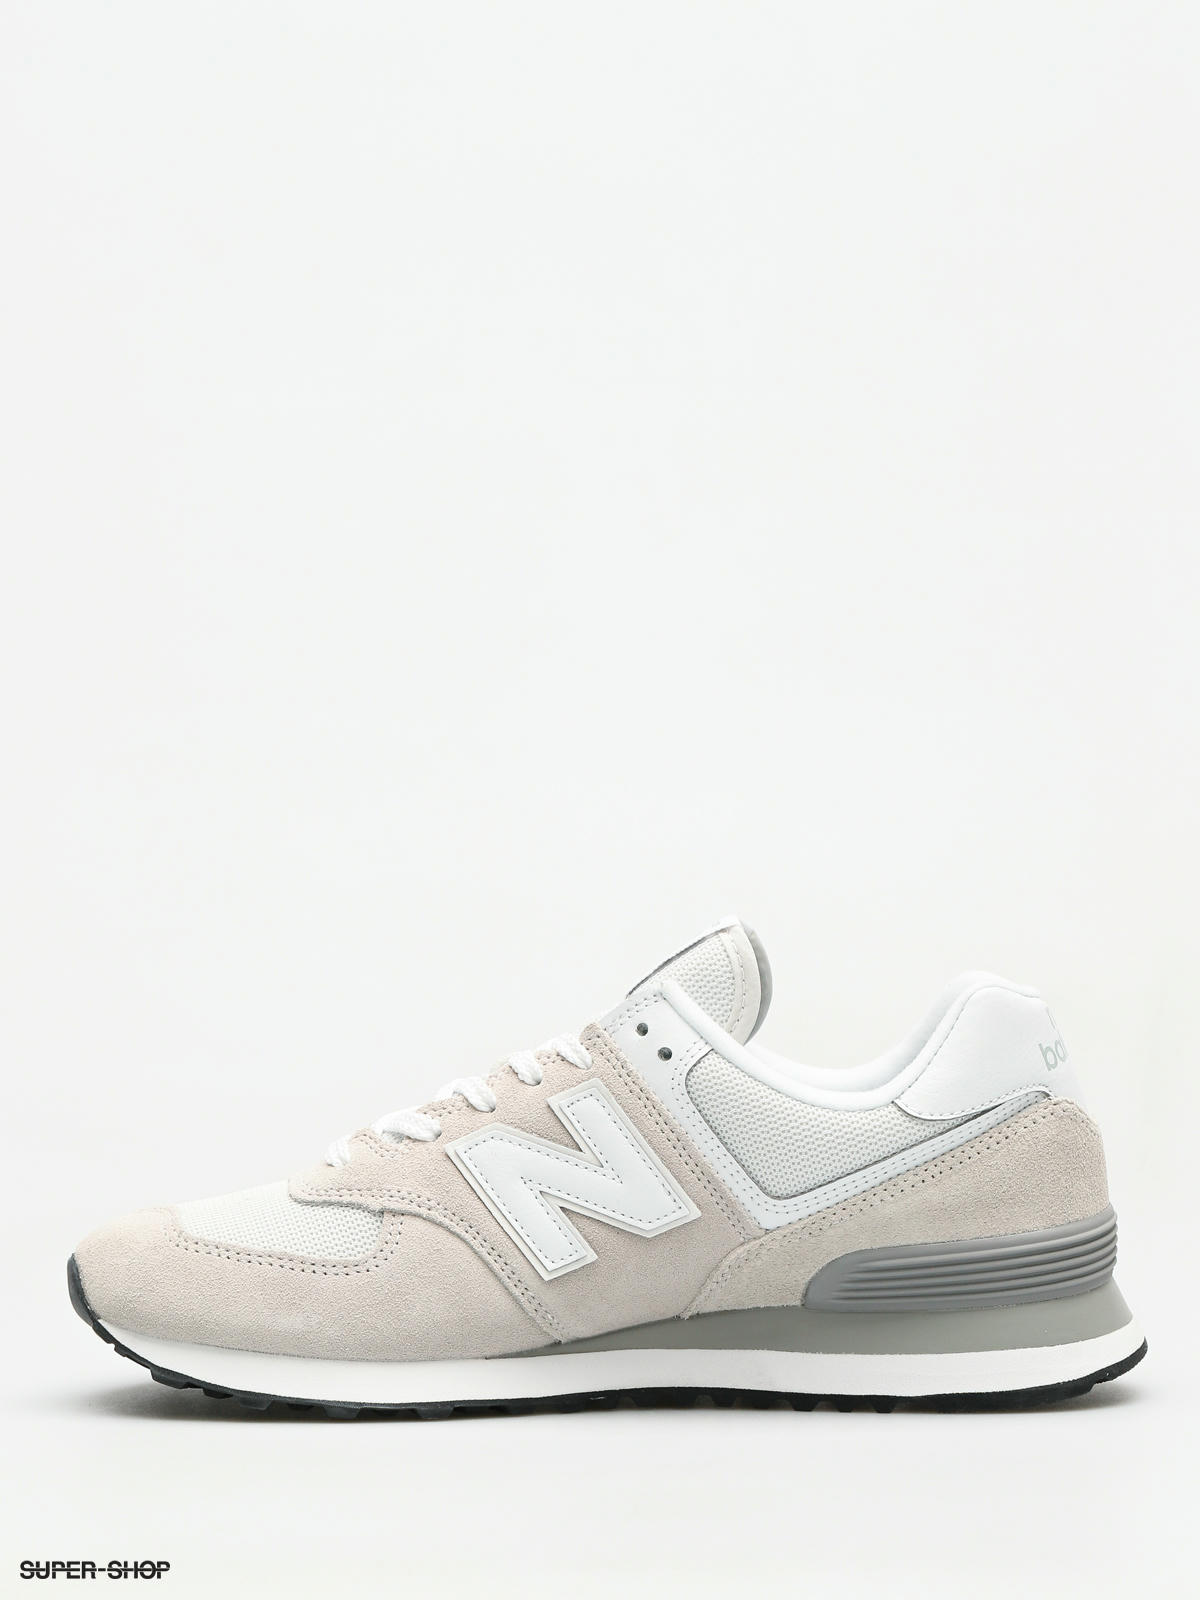 New Balance Shoes 574 (nimbus cloud)